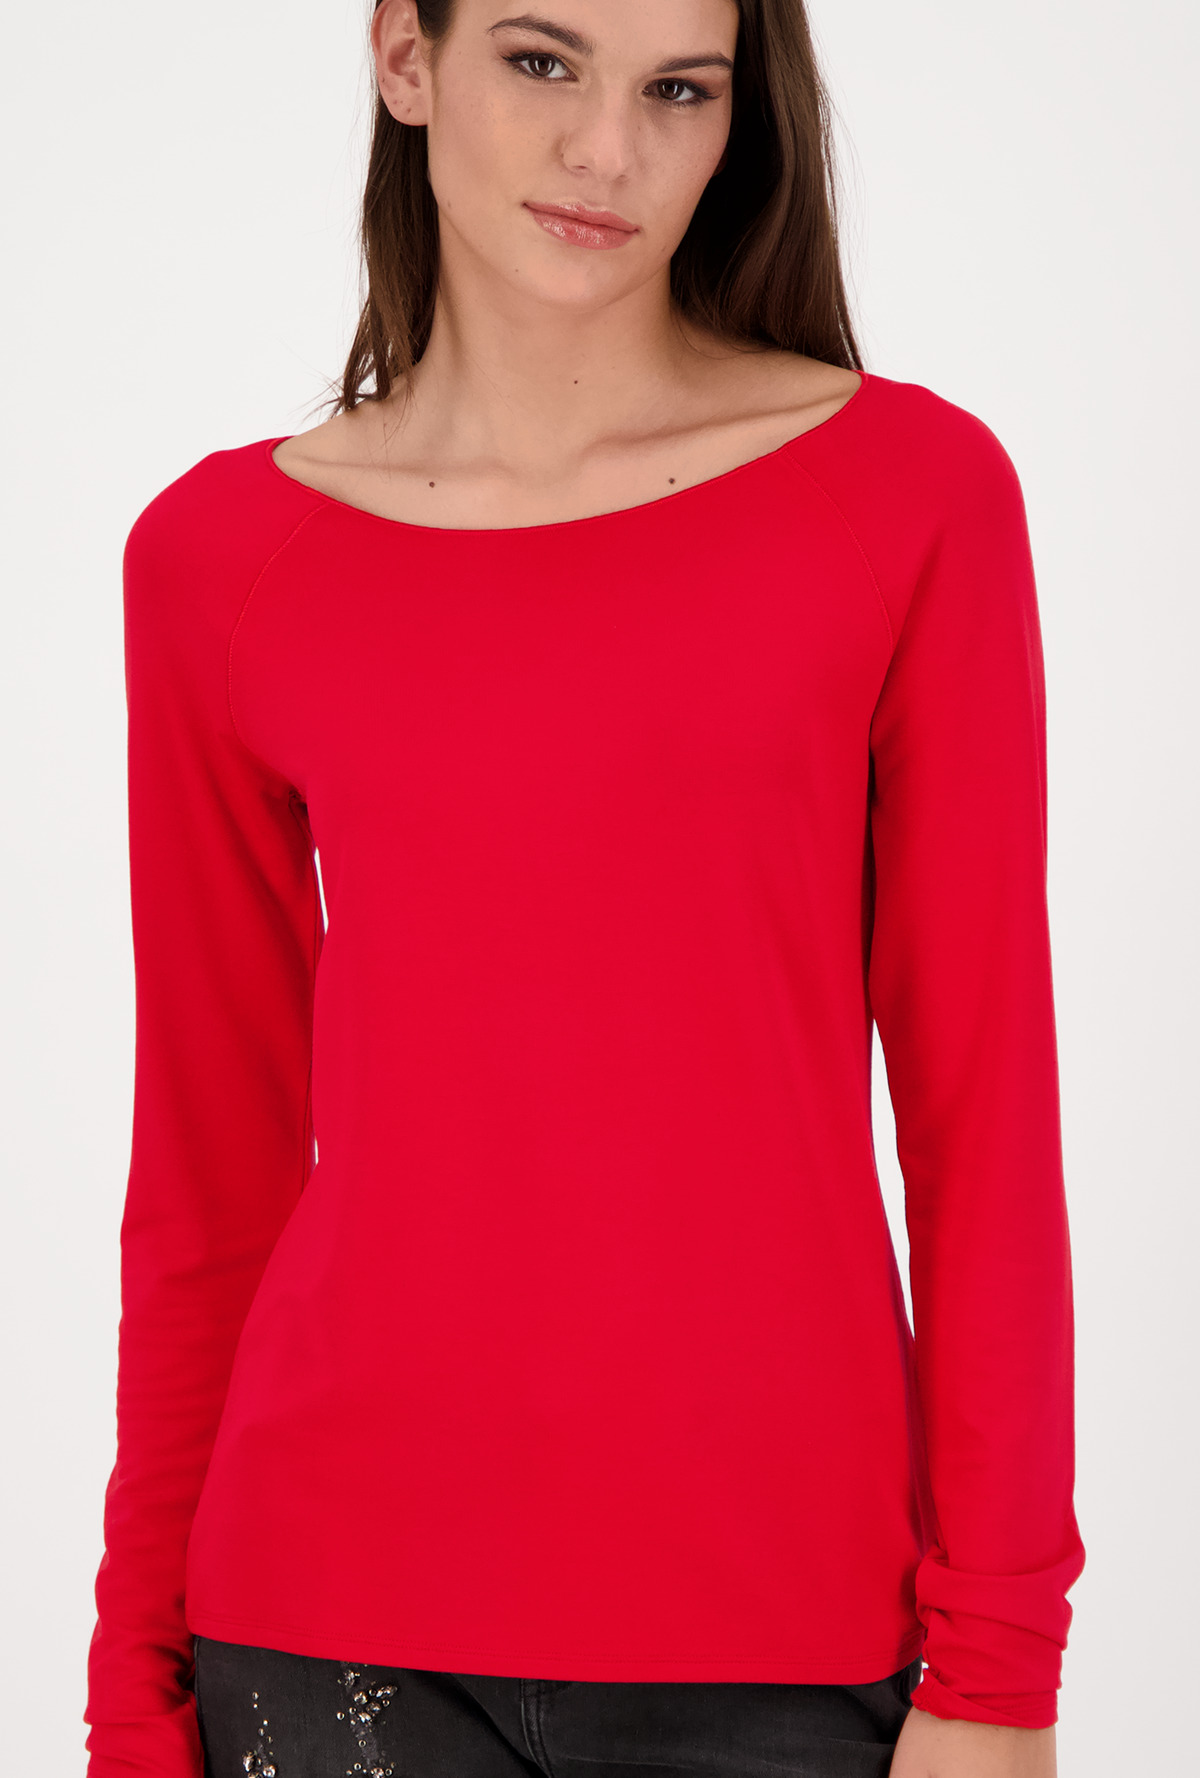 Monari Unifarbenes Langarm Jersey Shirt Rundhals mode | weber mit